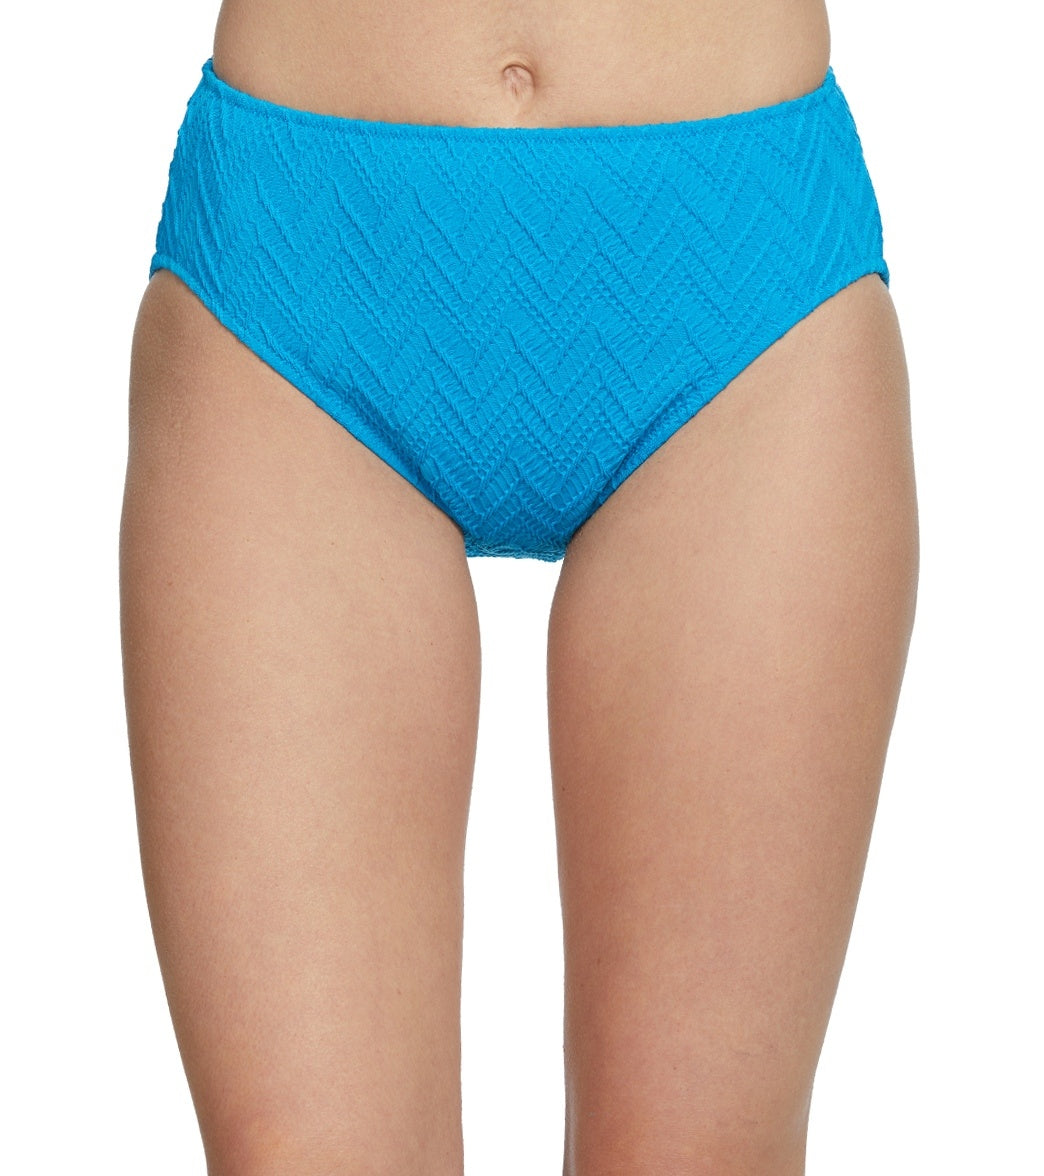 Gottex Jazz Texture High Waisted Bikini Bottom - Turquoise 16 - Swimoutlet.com